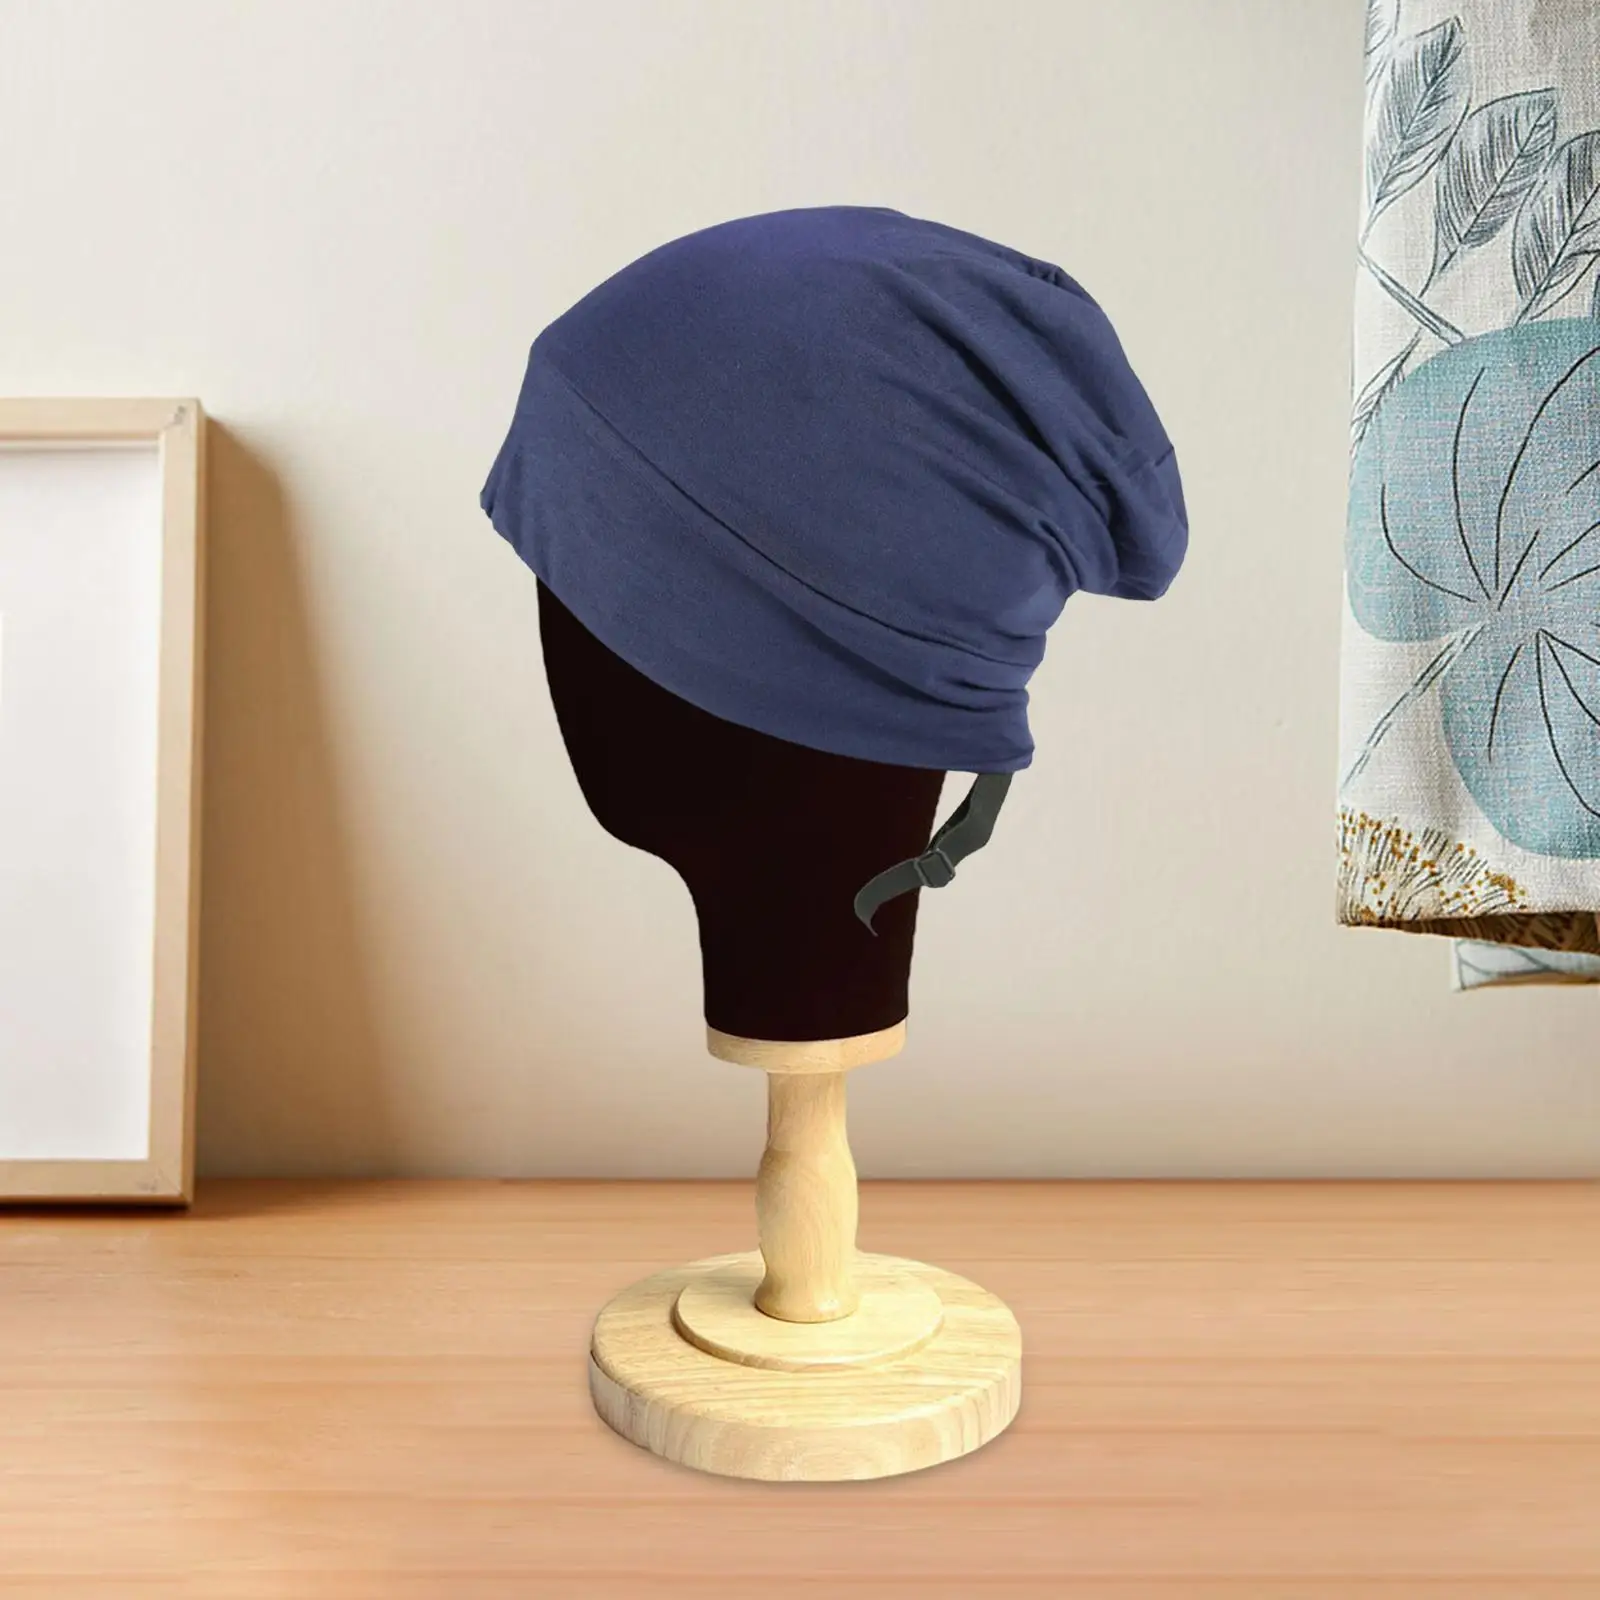 Women Sleeping Hat Bonnet wrap Suitable for Most People Head Shapes Multifunctional Accessories Lightweight Headwear